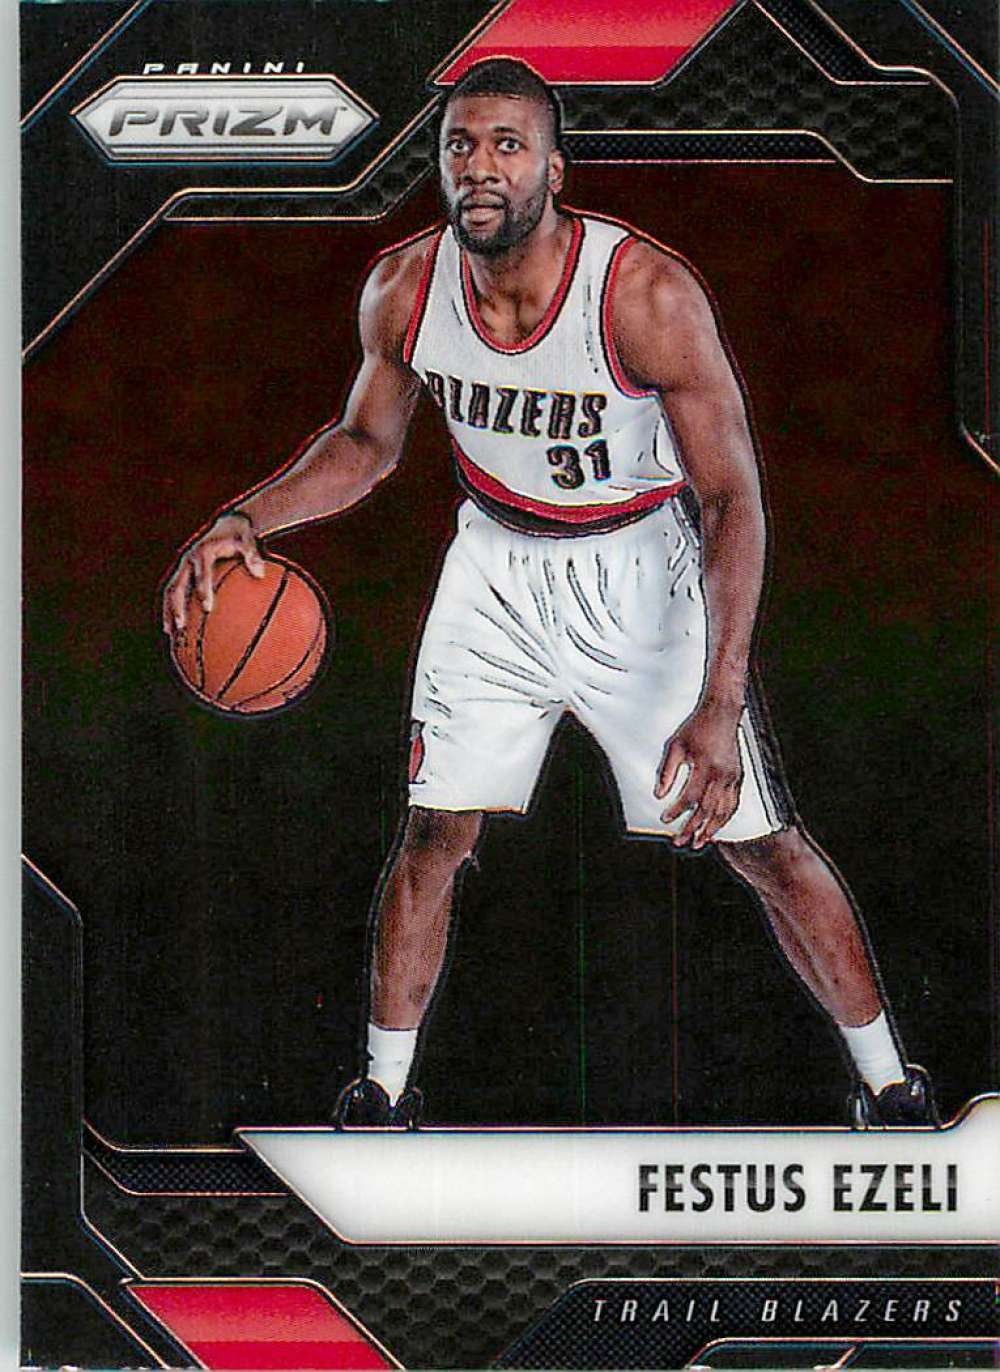 2016-17 Panini Prizm Basketball #275 Festus Ezeli Portland Trail Blazers Official NBA Trading Card